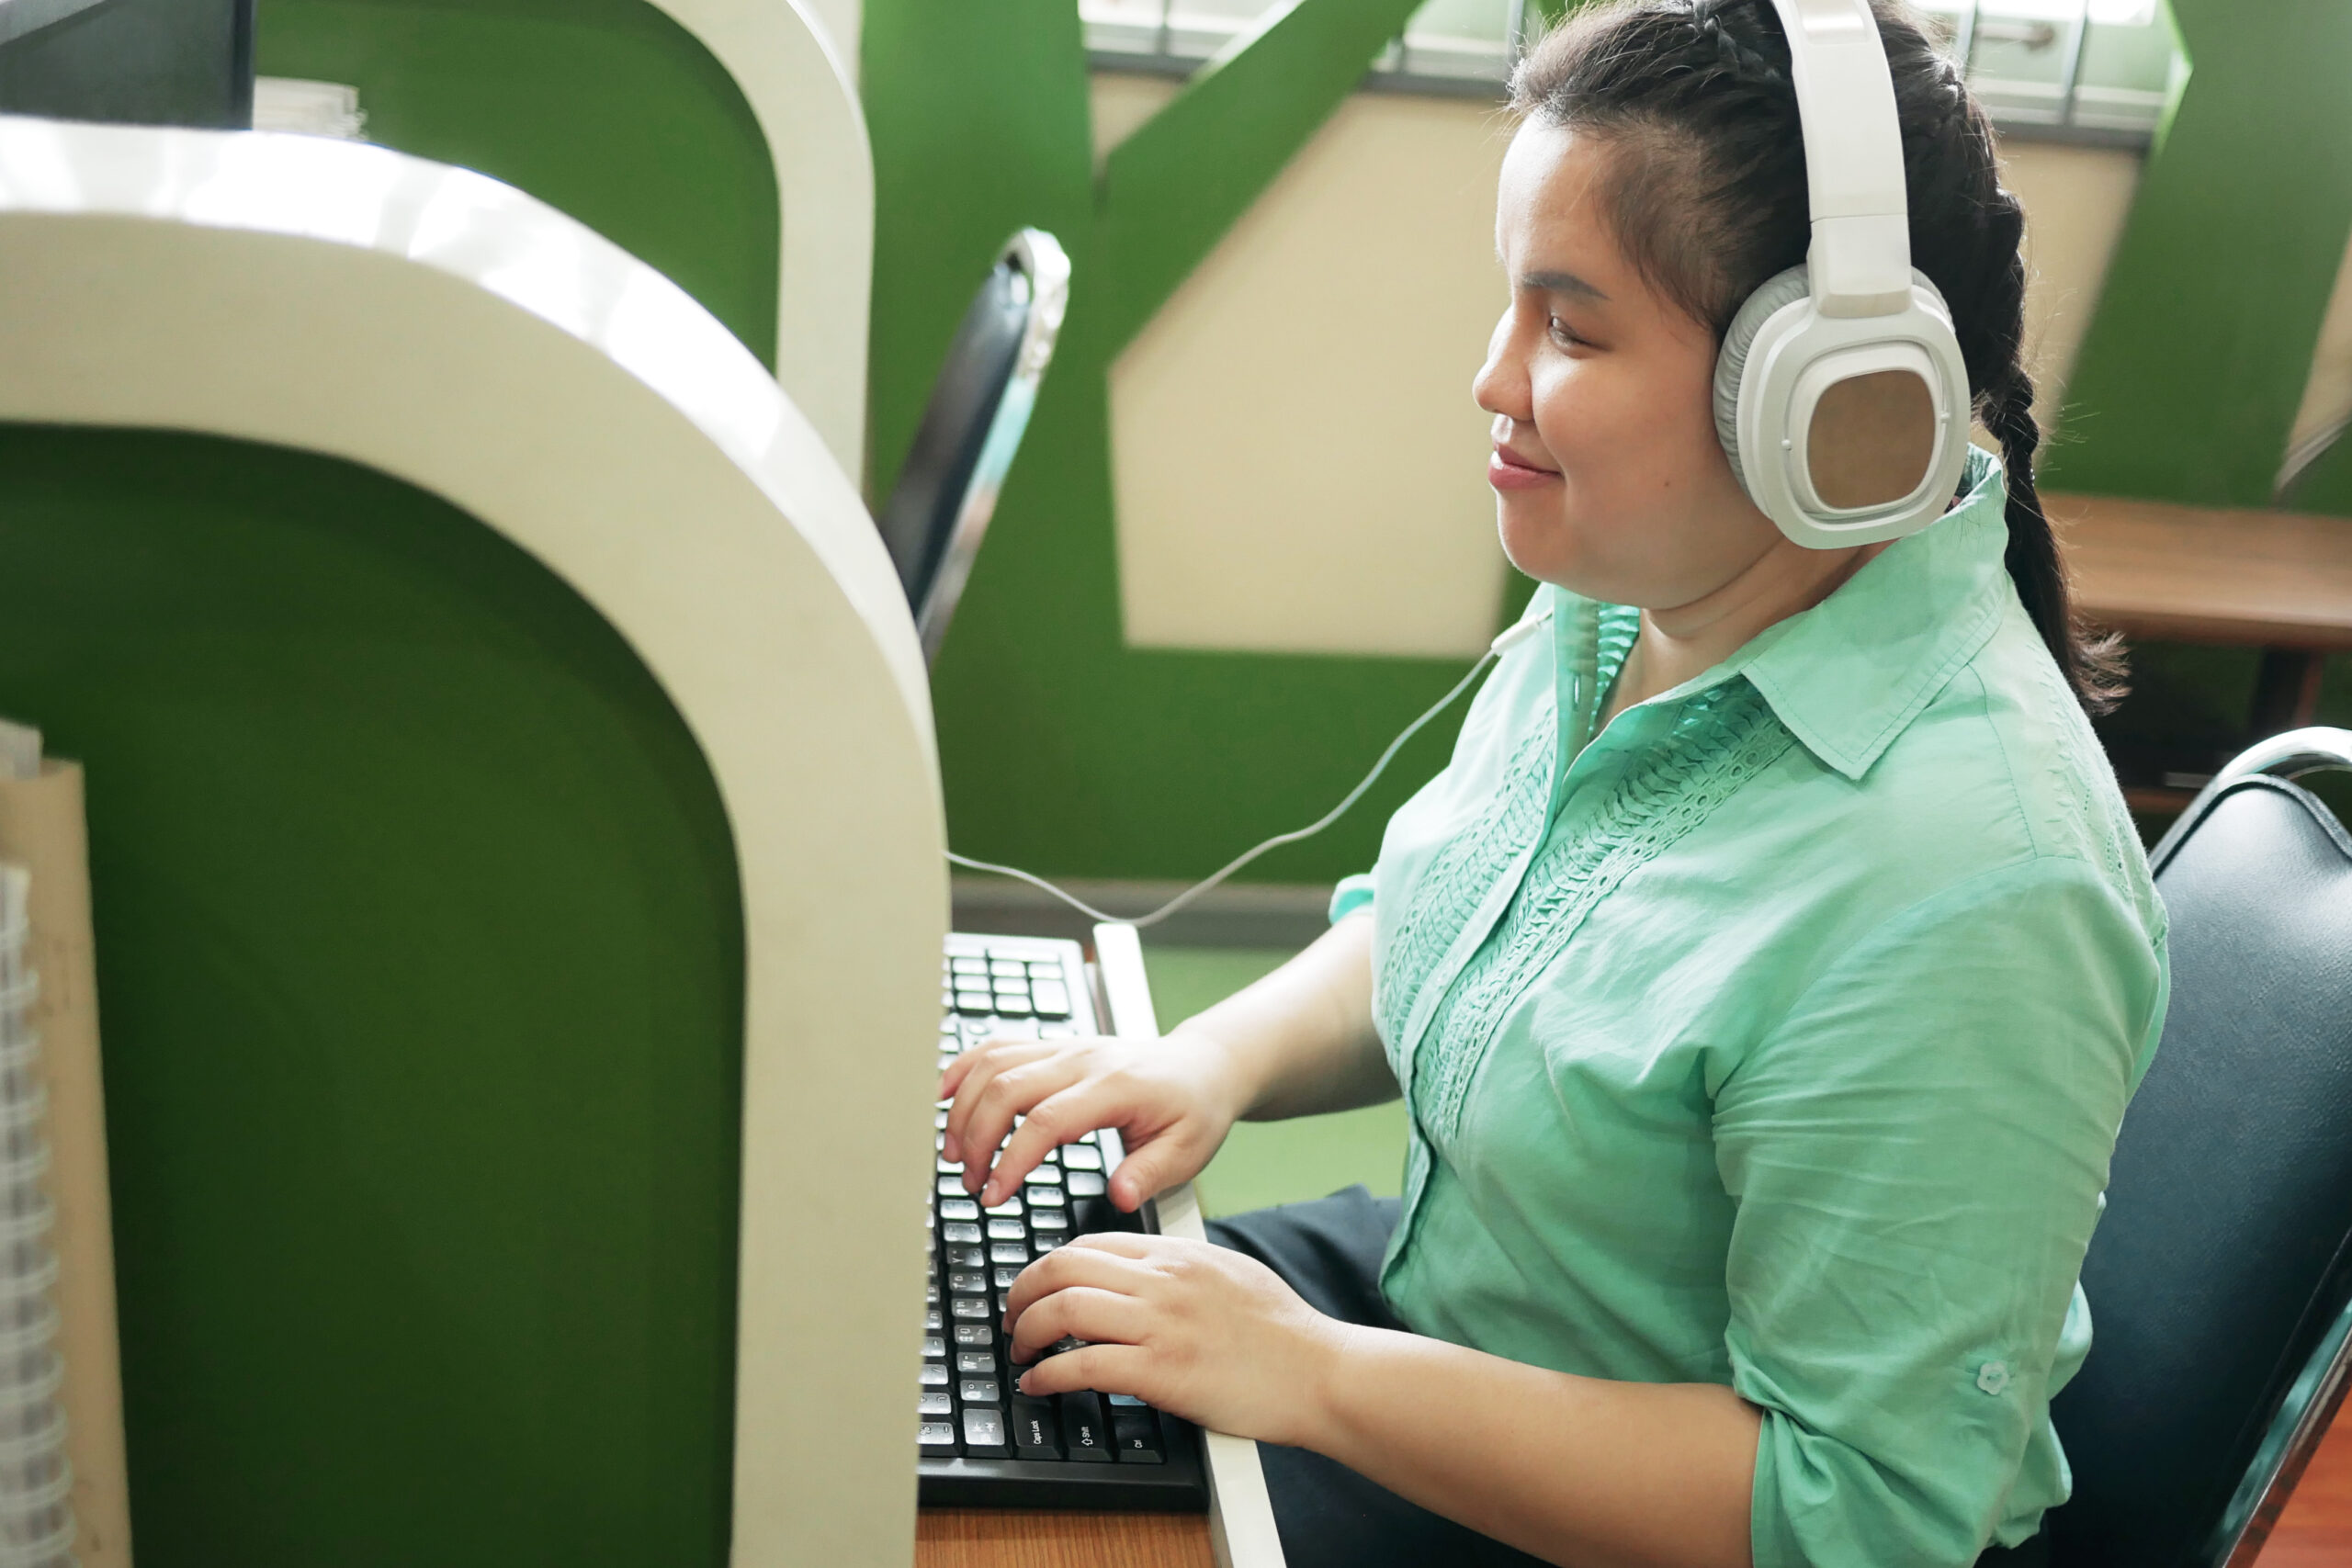 woman wearing headphones typing on a keyboard in a carrel